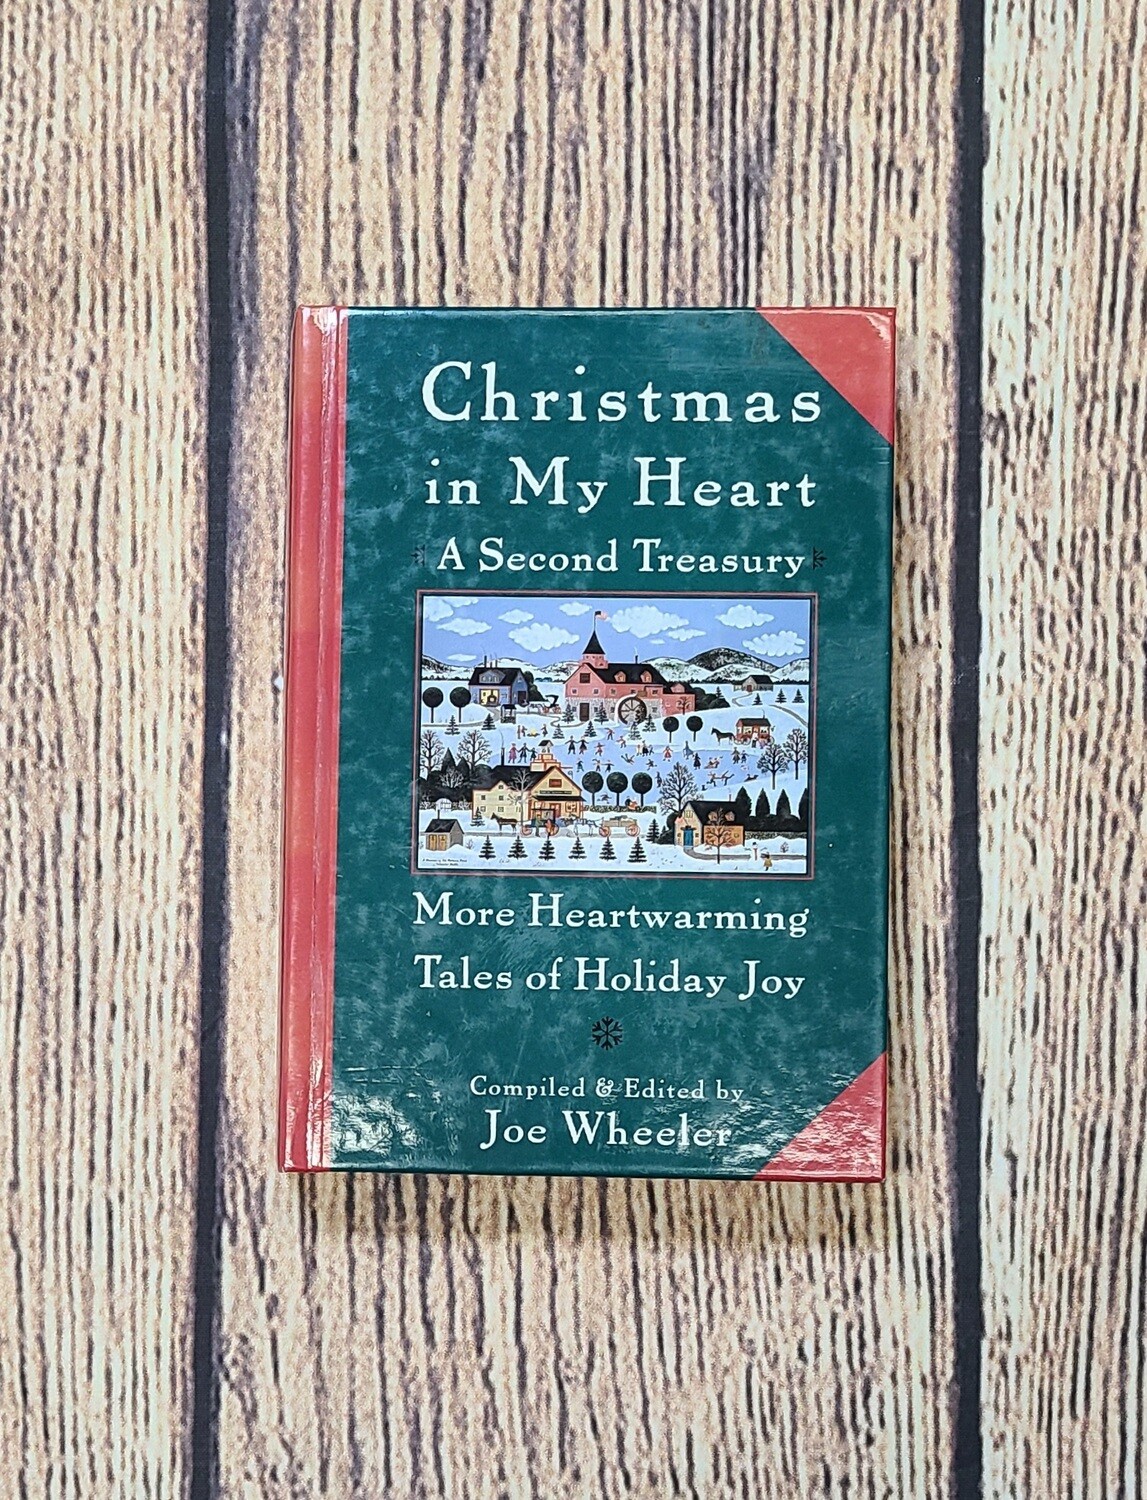 Christmas in My Heart: A Second Treasury by Joe Wheeler